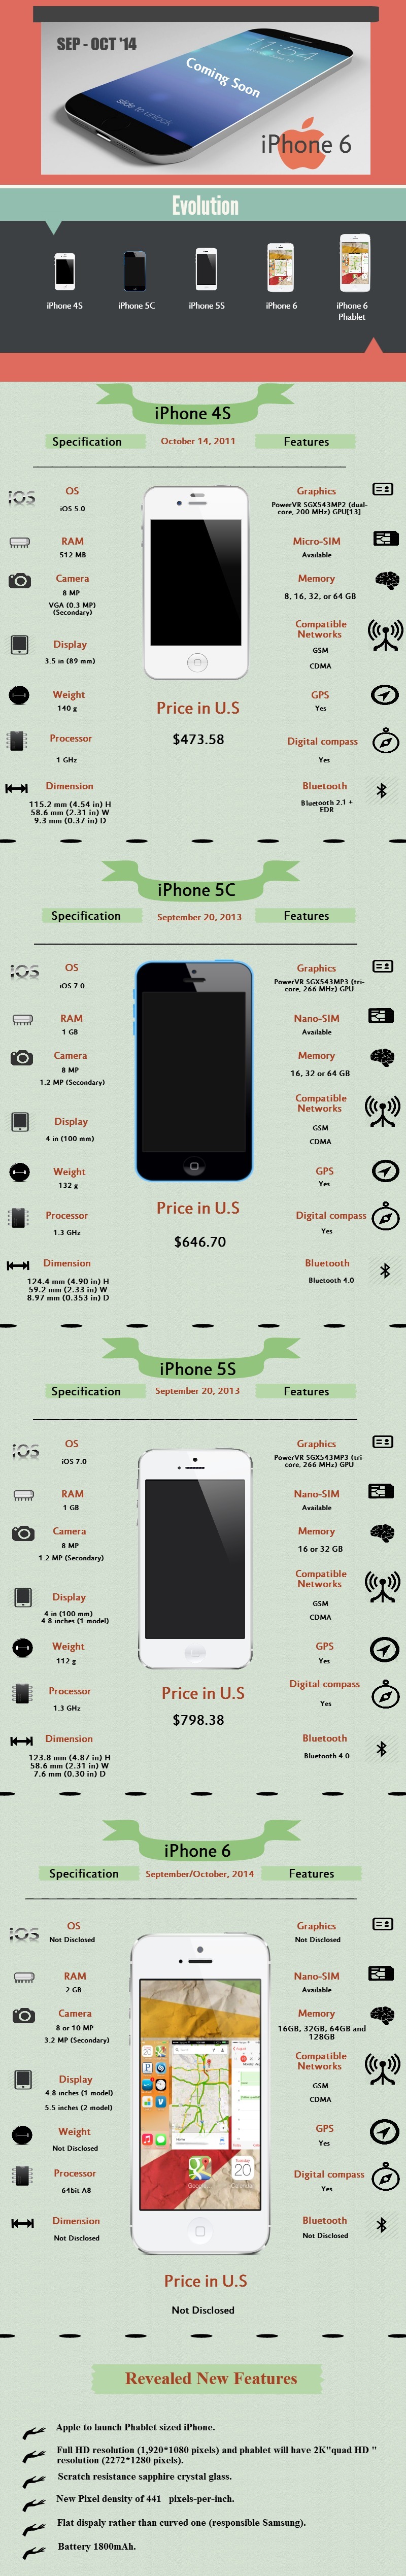 Iphone 6, 5s, 5c features comparison Infographic